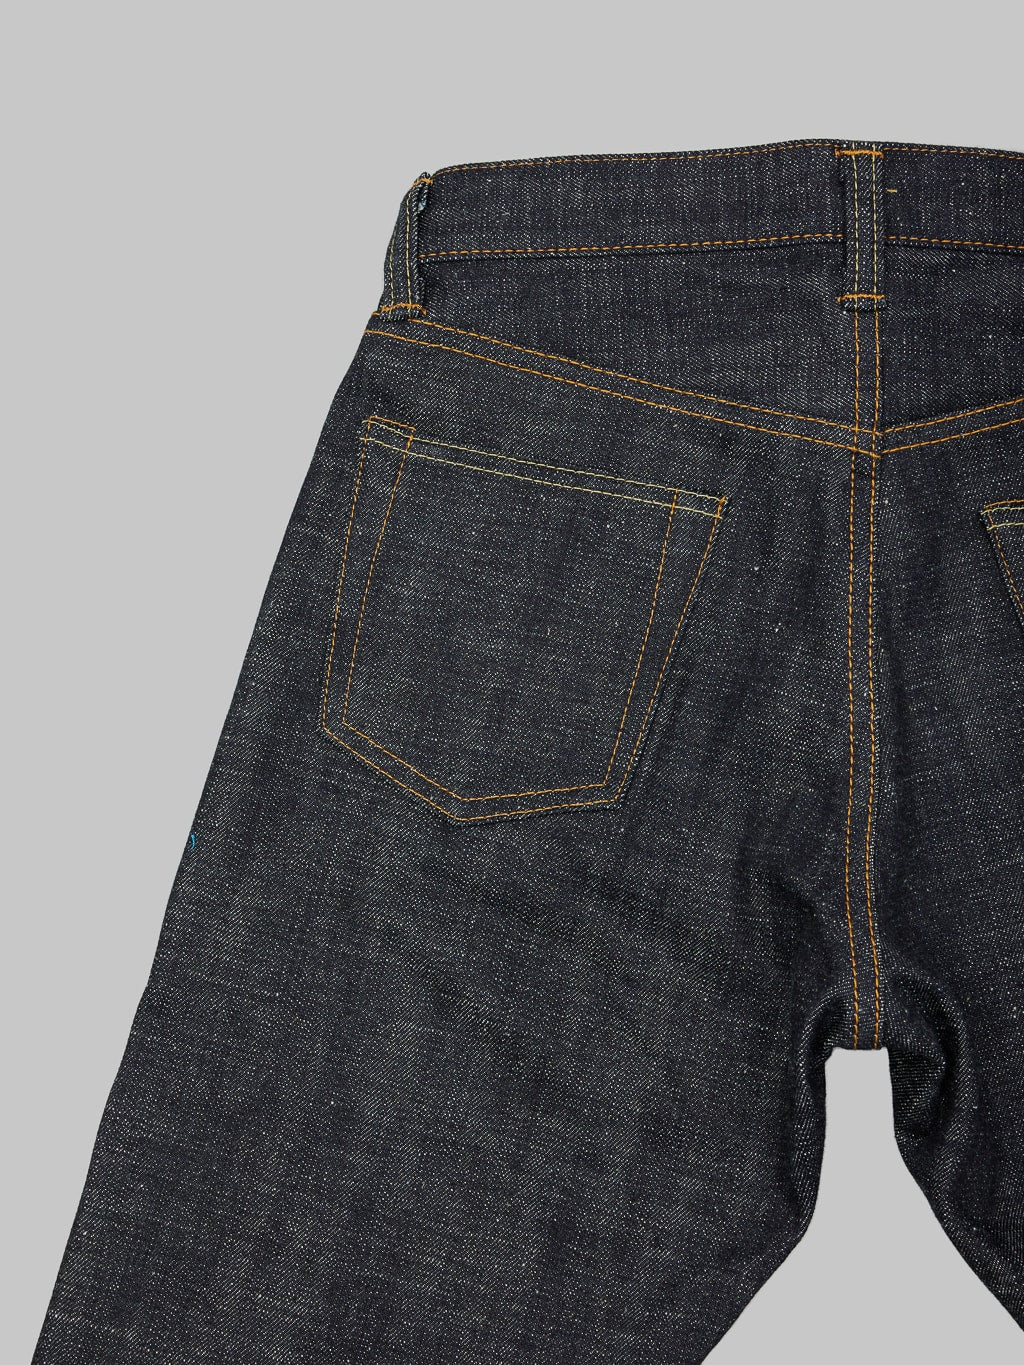 momotaro jeans 0605 82 16oz texture denim natural tapered plain pocket